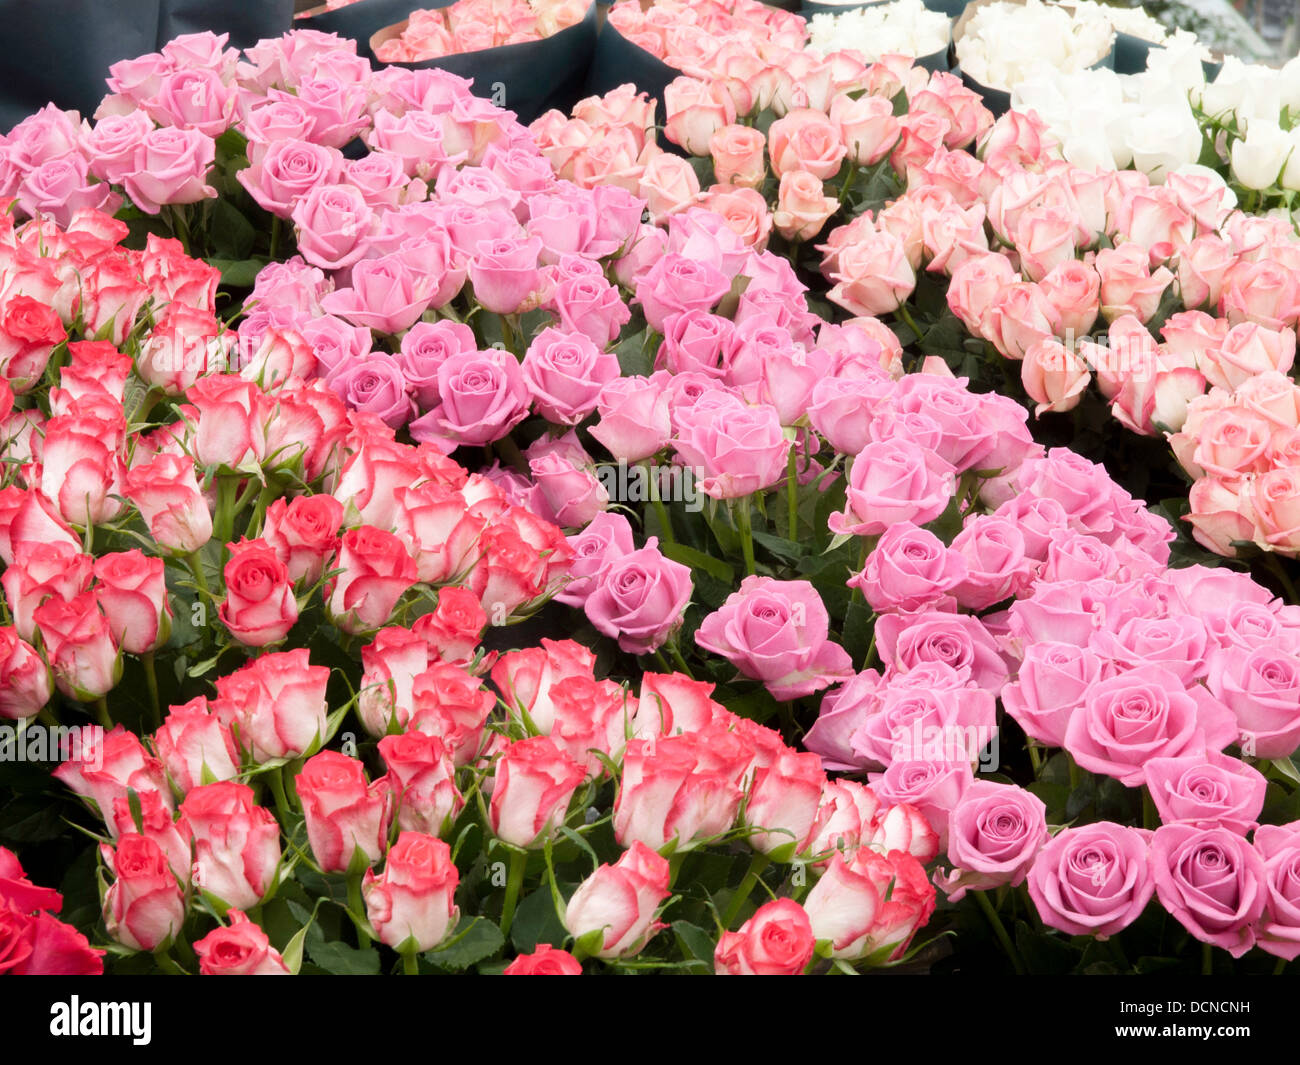 Visualizza di rose recise Foto stock - Alamy